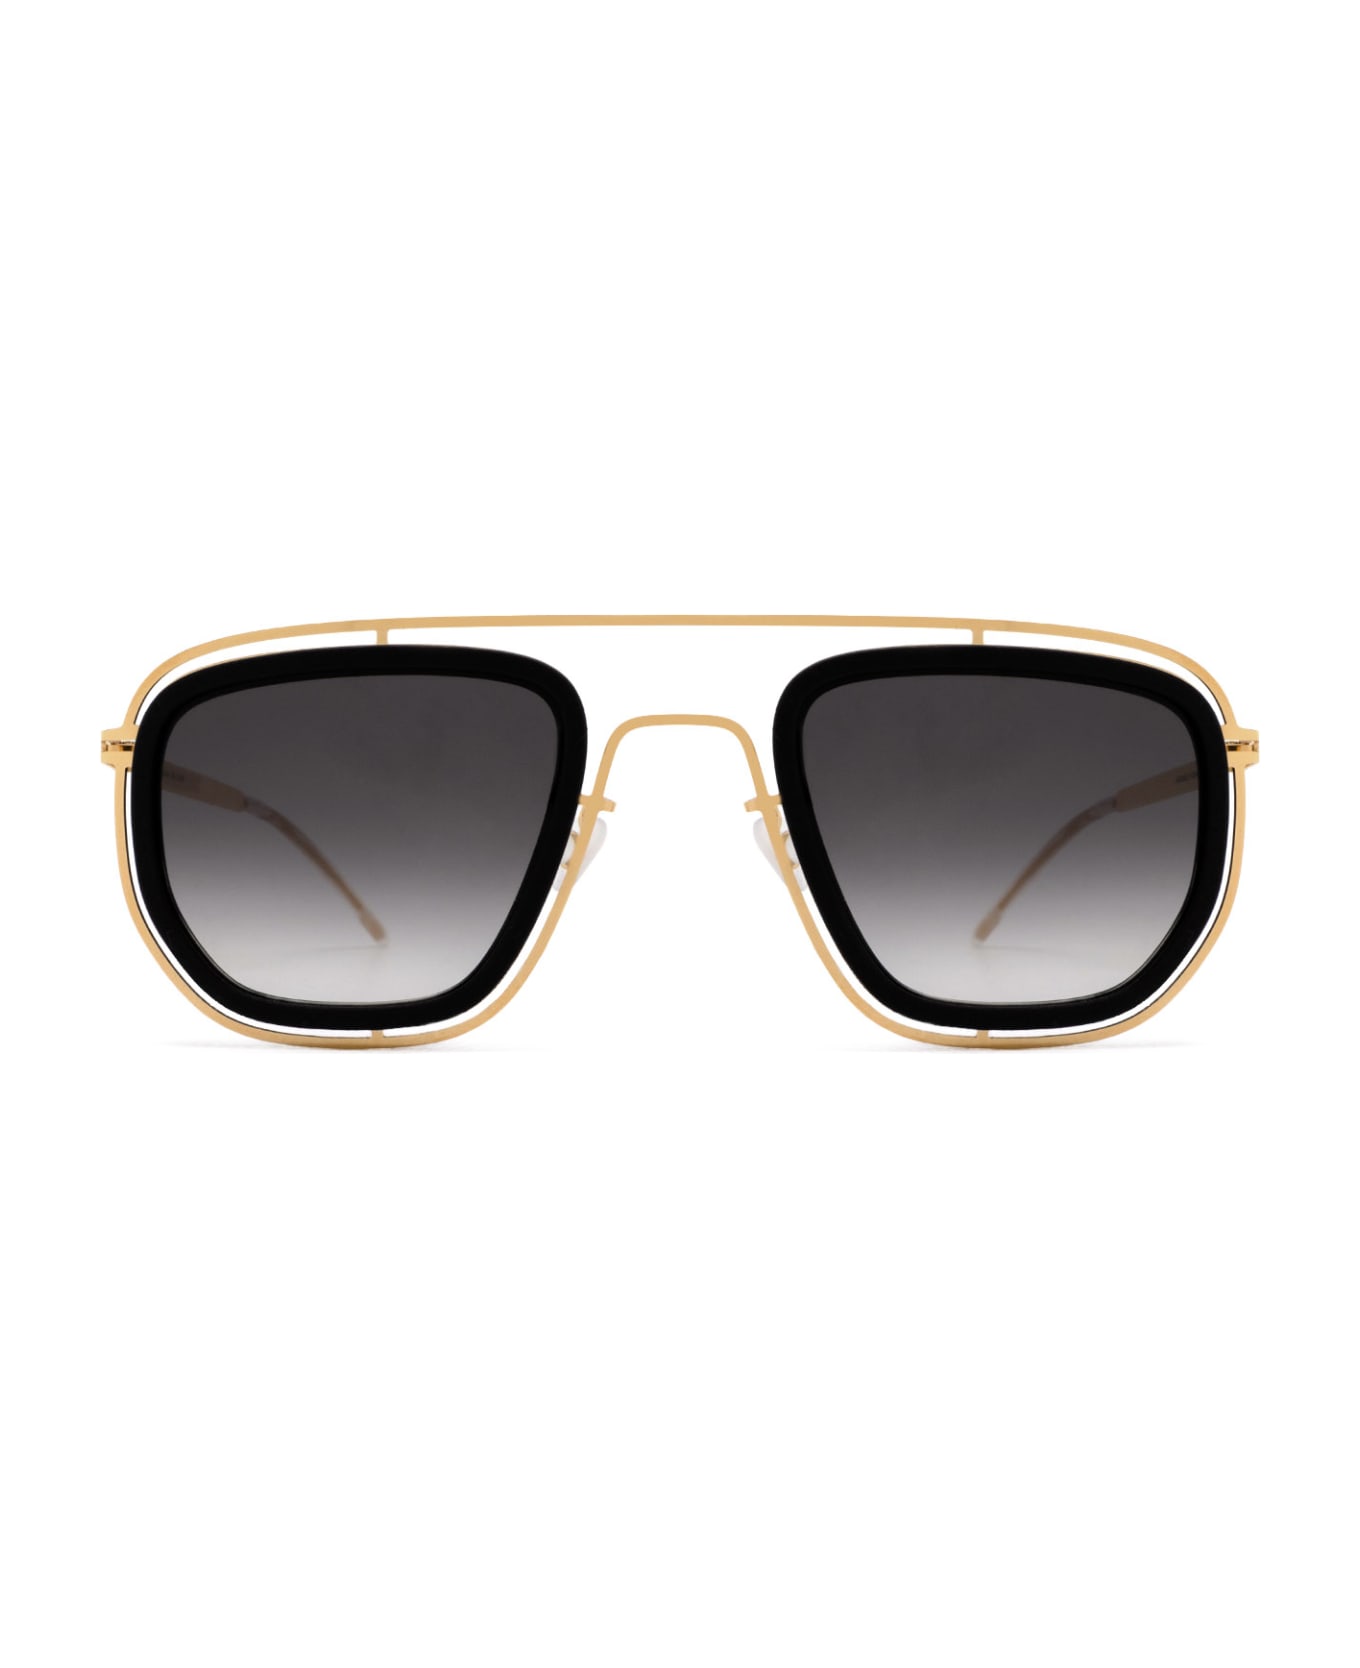 Mykita Ferlo Sun Mh7-pitch Black/glossy Gold Sunglasses - MH7-Pitch Black/Glossy Gold サングラス